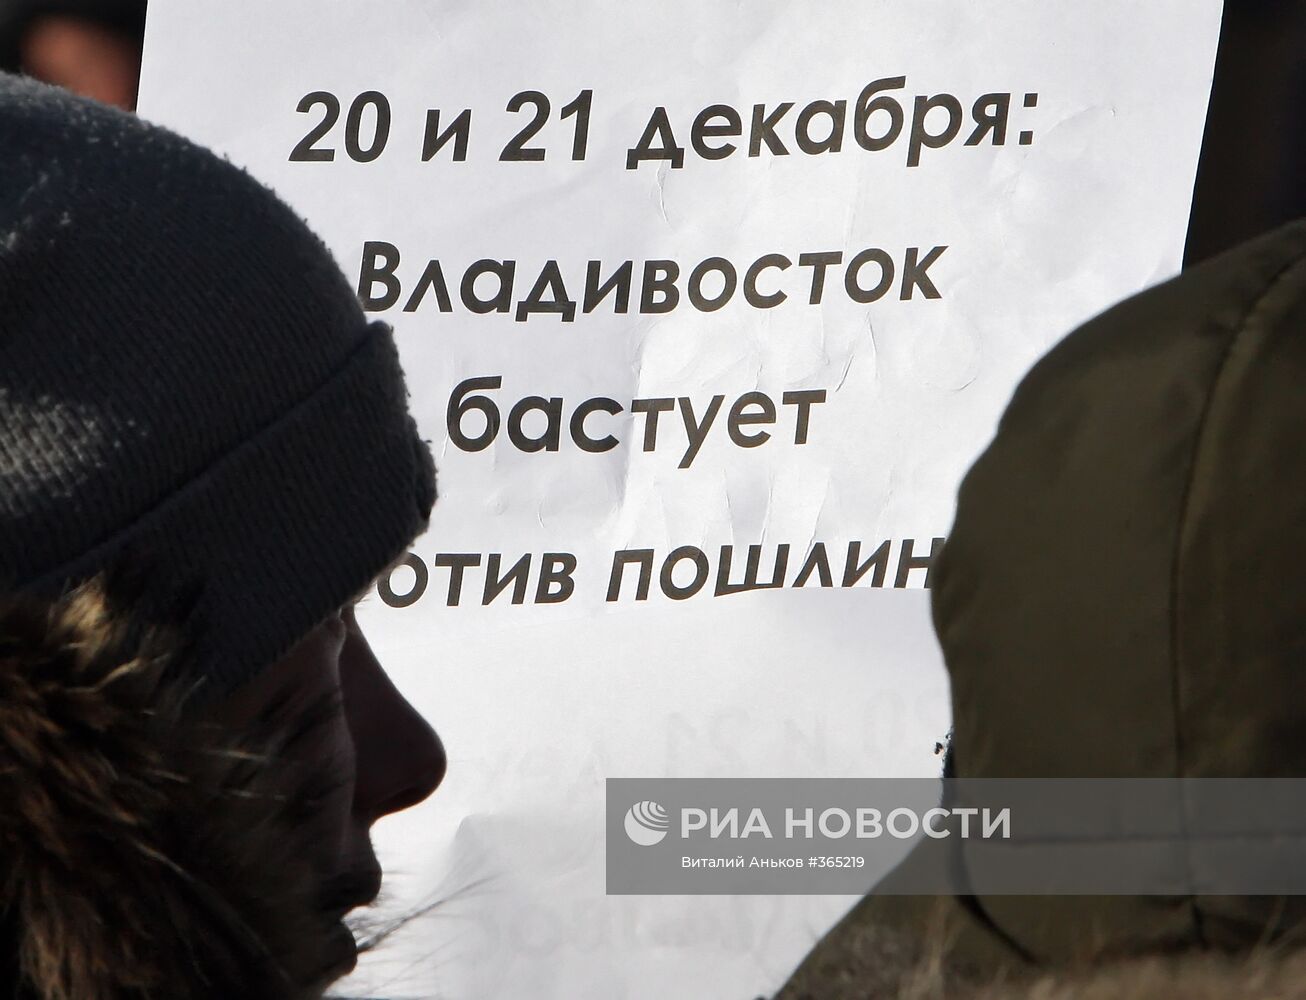 Акция "Защитим Приморье и свои права" во Владивостоке